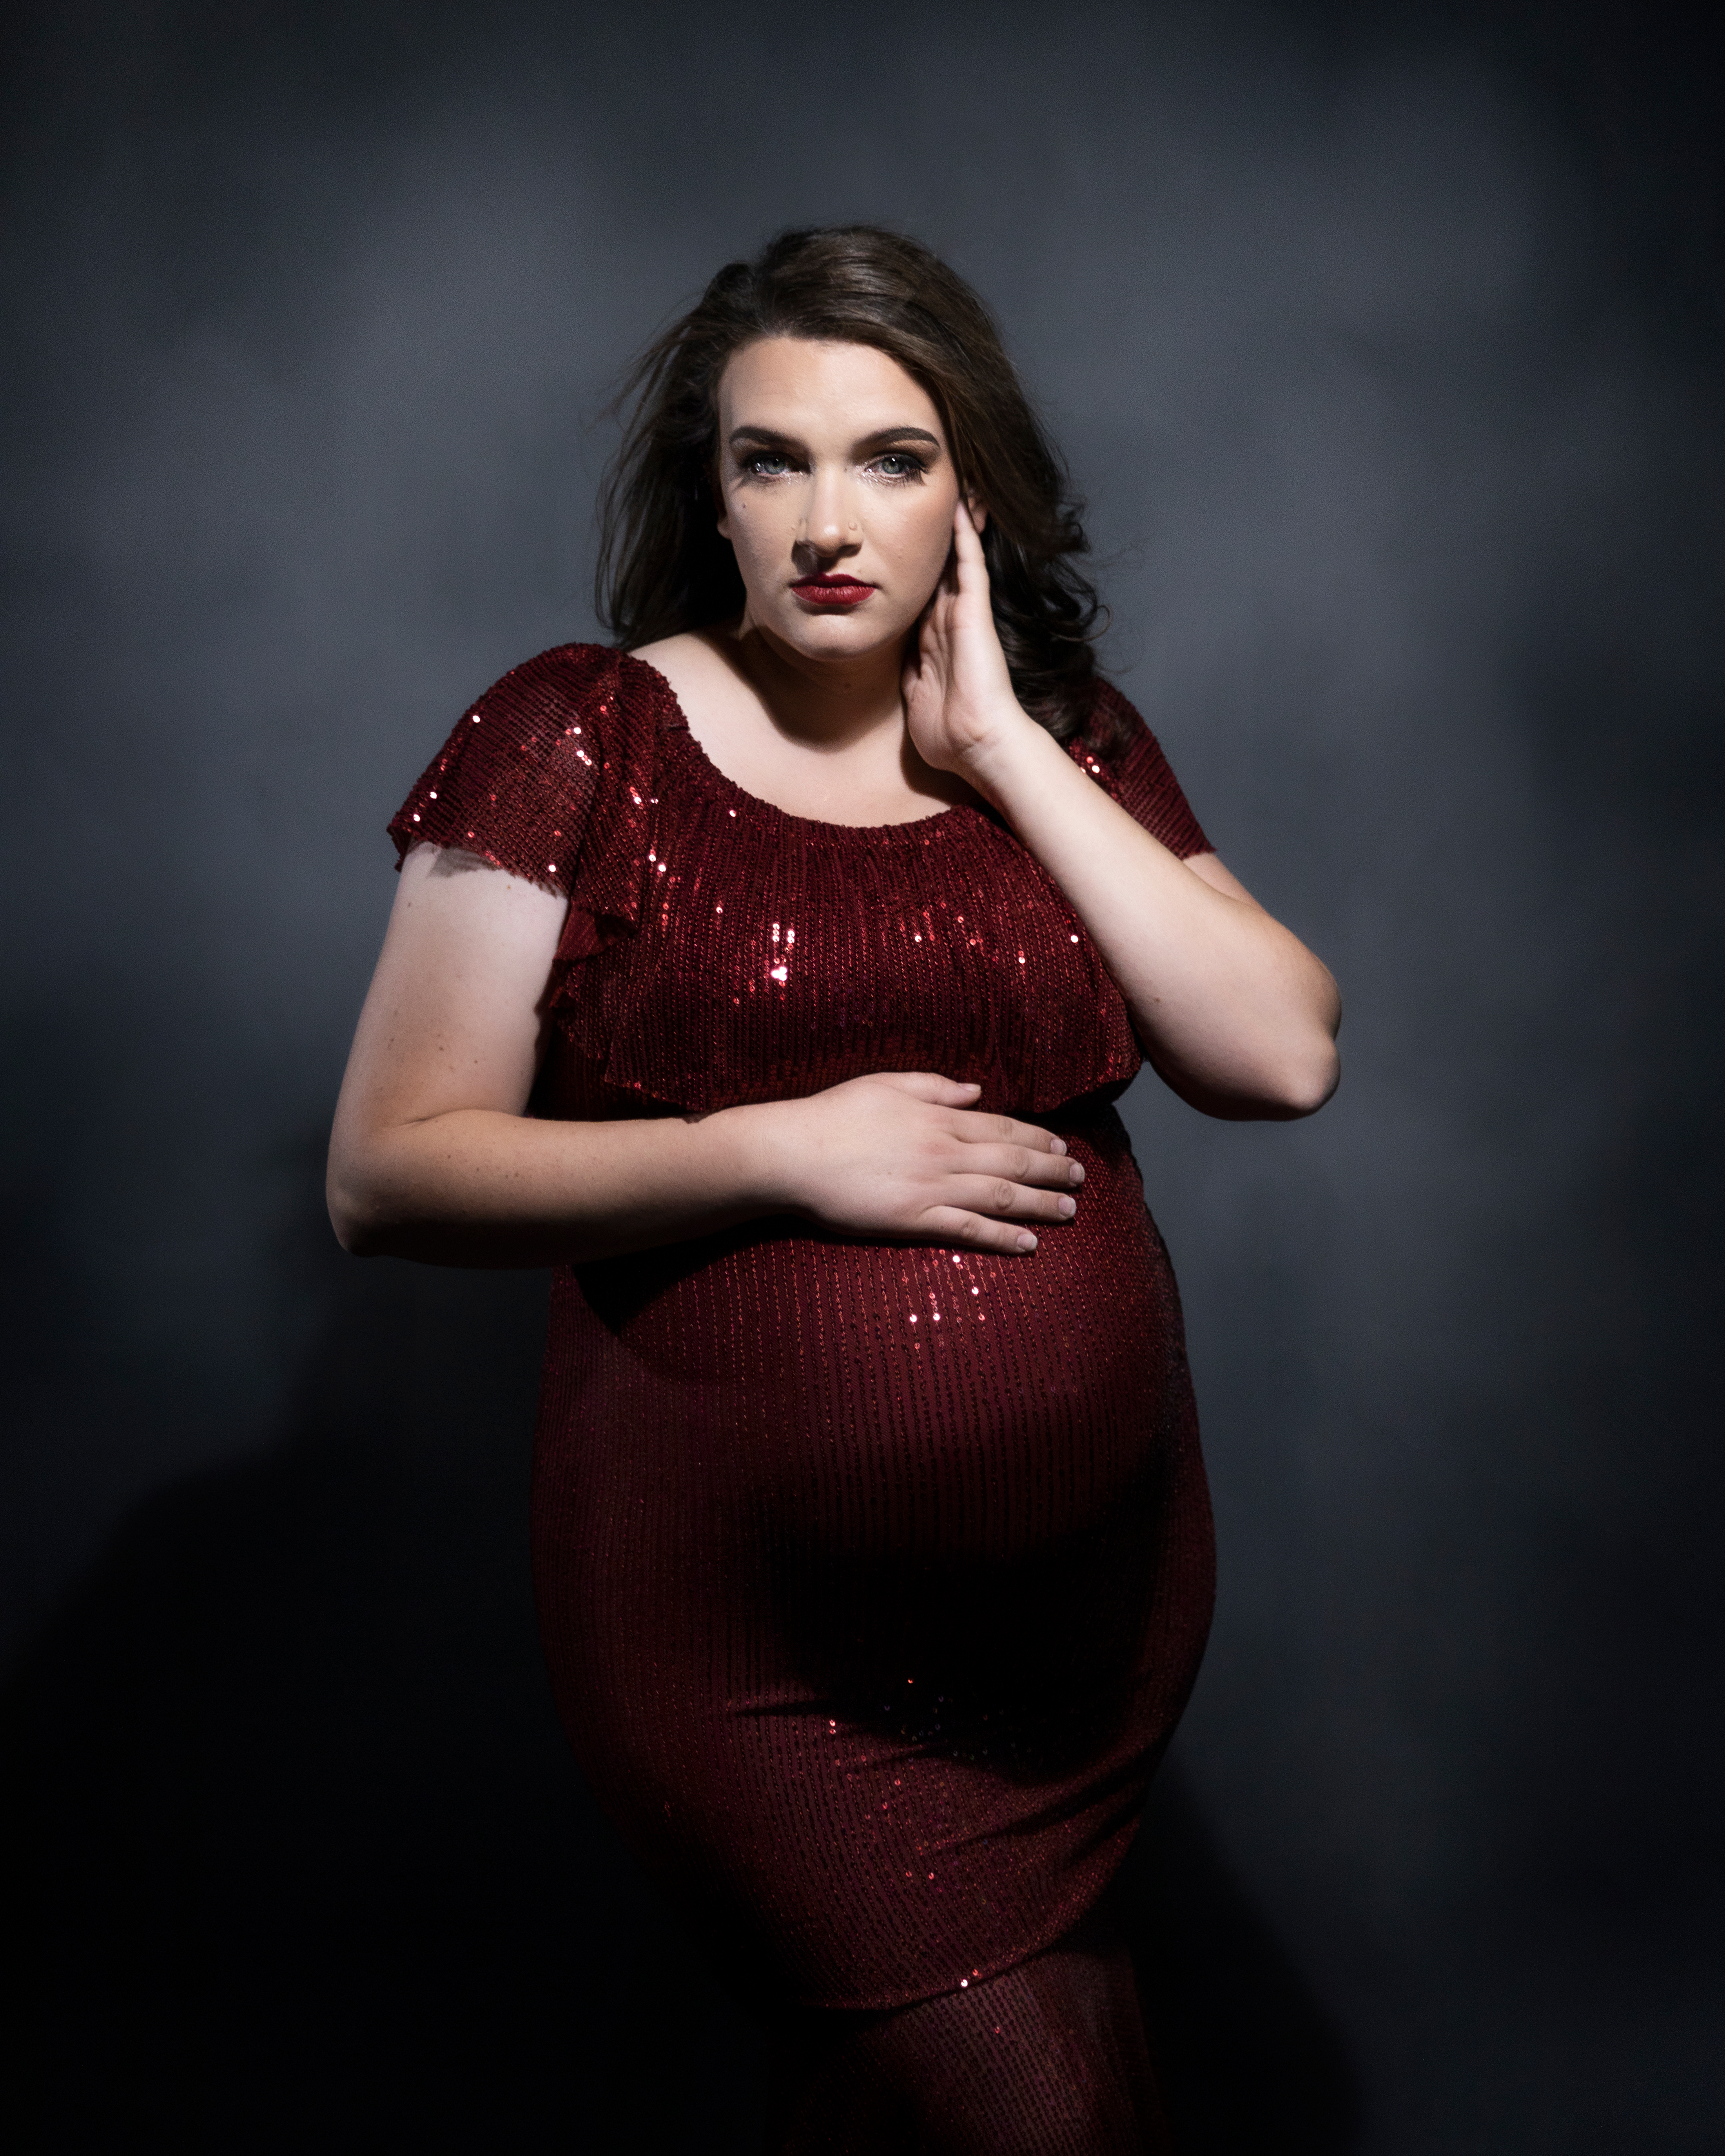 https://feliciasaundersphotography.com/wp-content/uploads/2021/11/Maternity-Photography-Newborn-Photography-Boudoir-Photography-Las-Vegas-Henderson-Family-Portrait-111-7.jpg